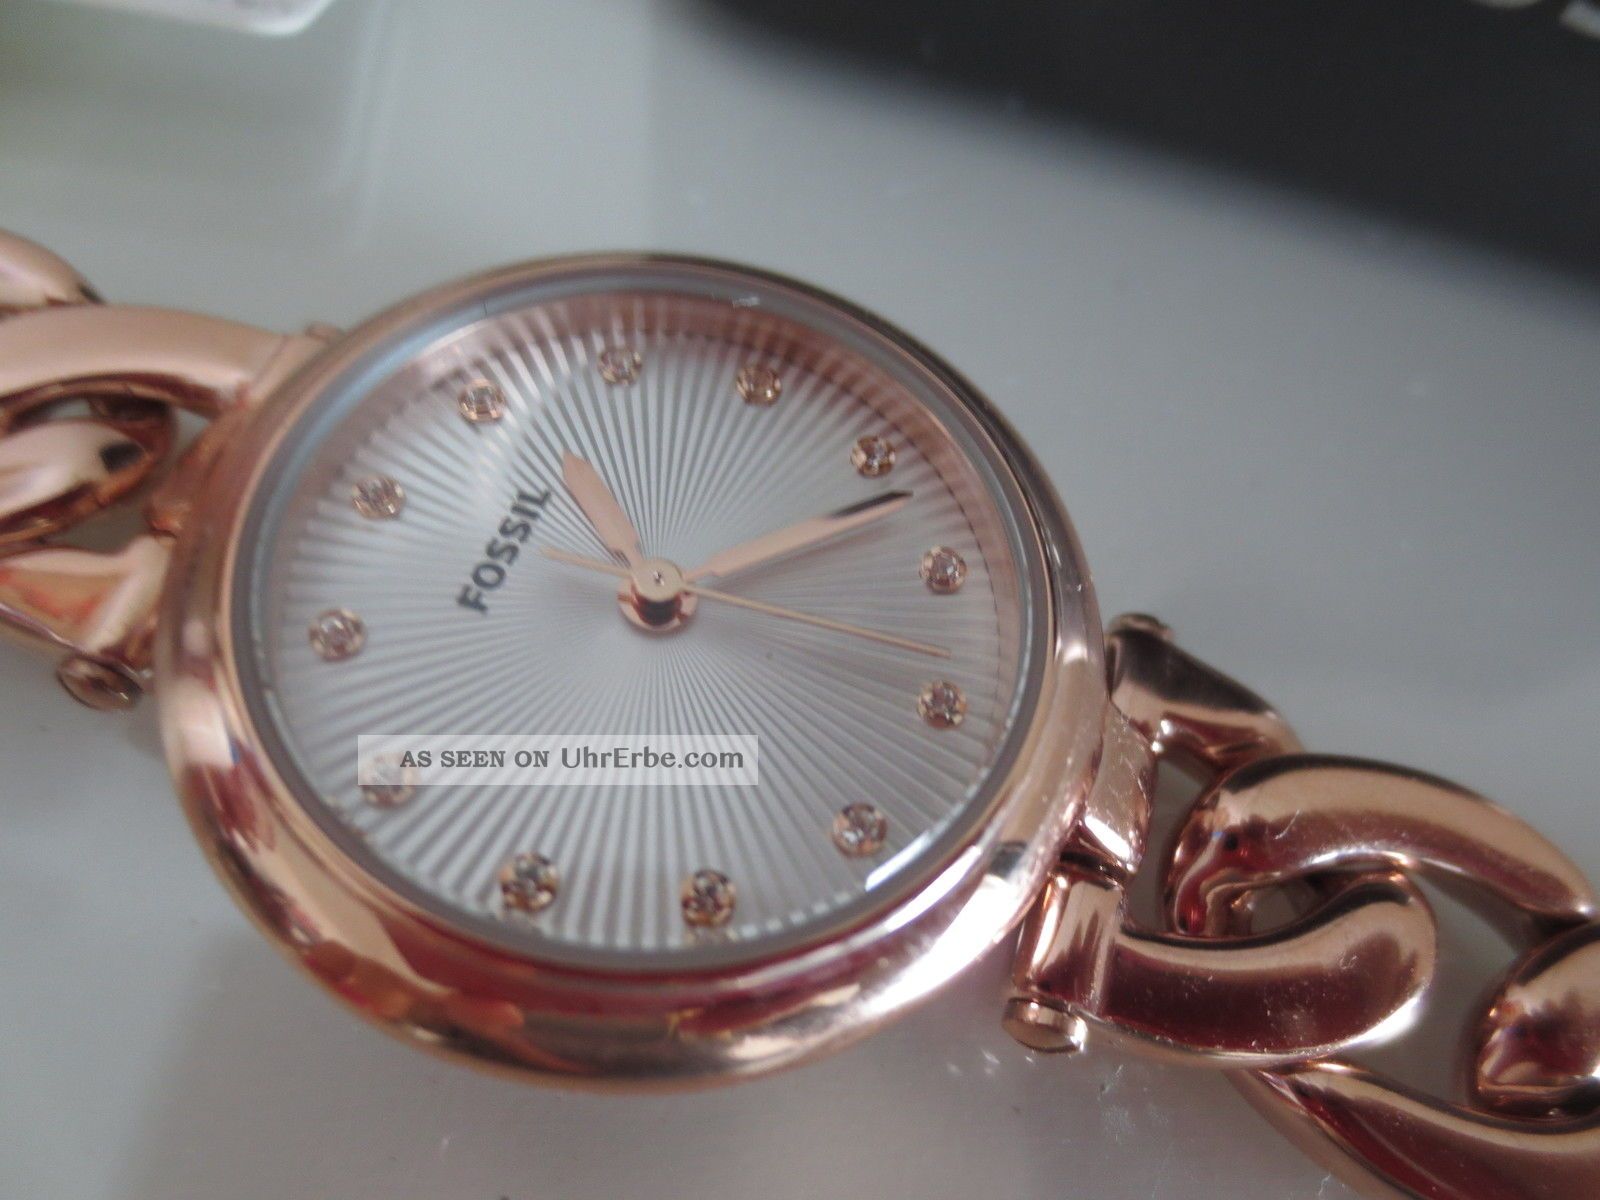 Fossil Damen Armband Uhr Es3392 Olive Rosegold Uhren Edahlstahl Damenuhr